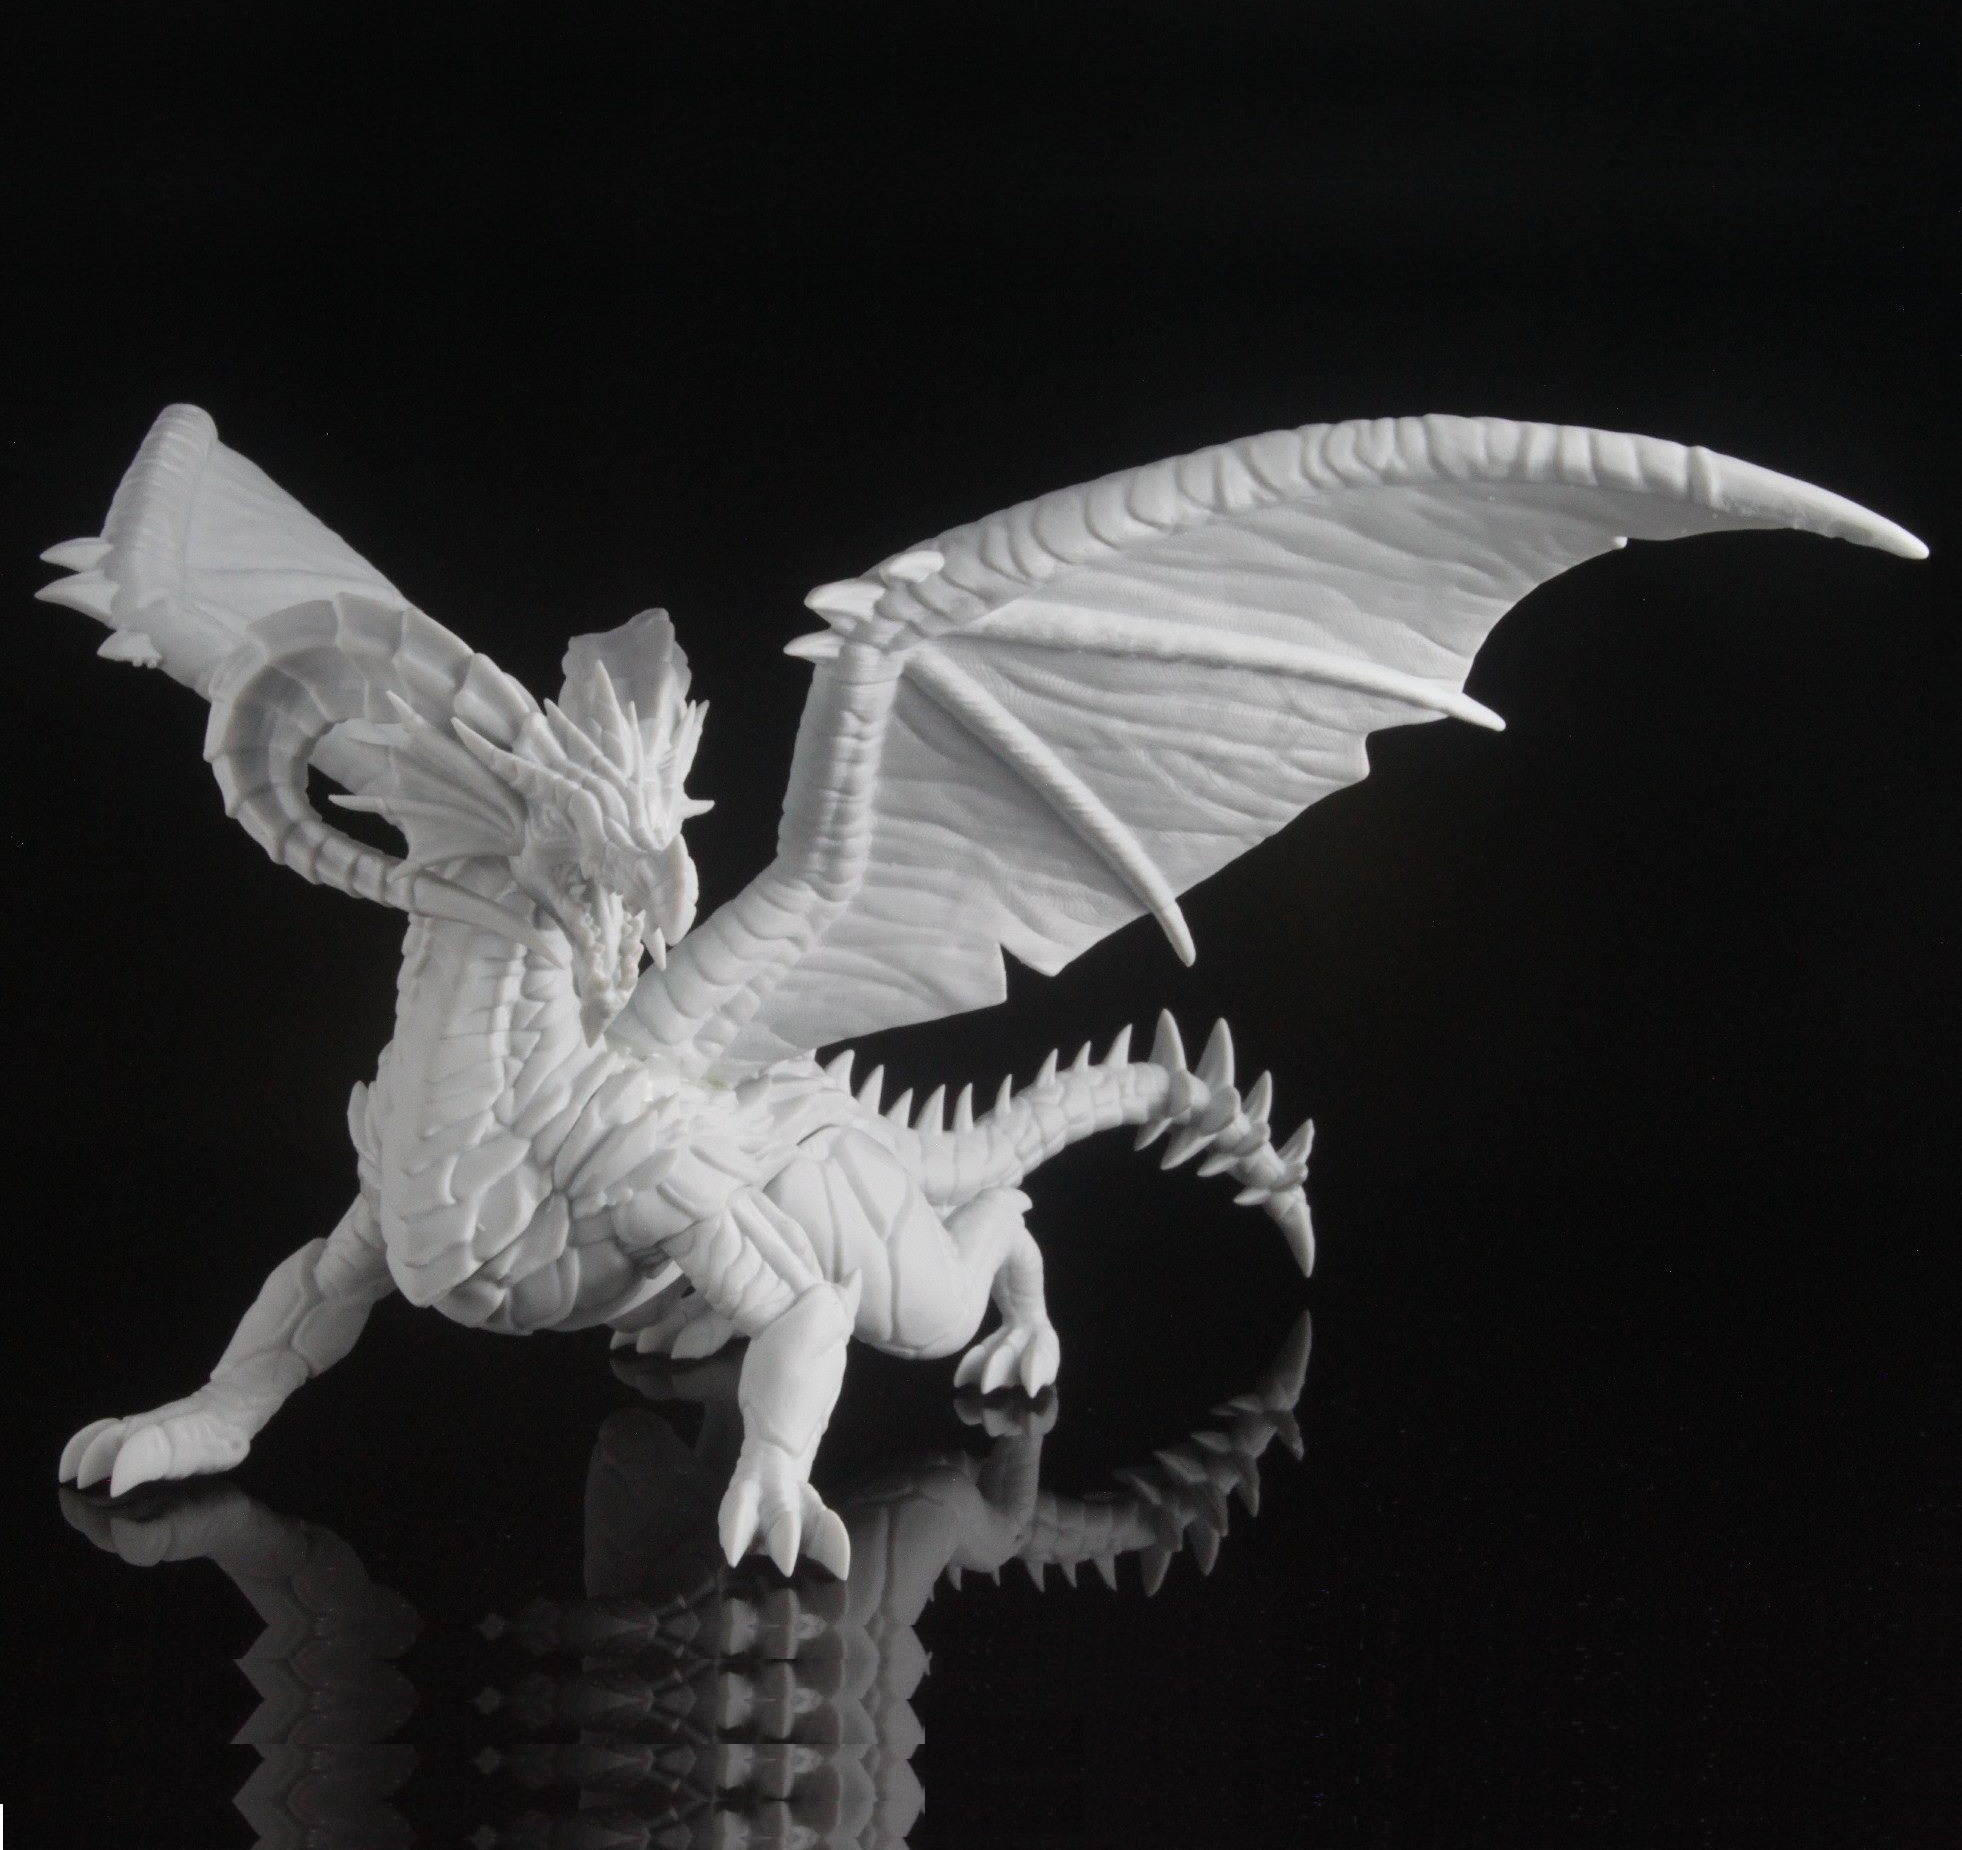 3D Printed Dragon by imlab